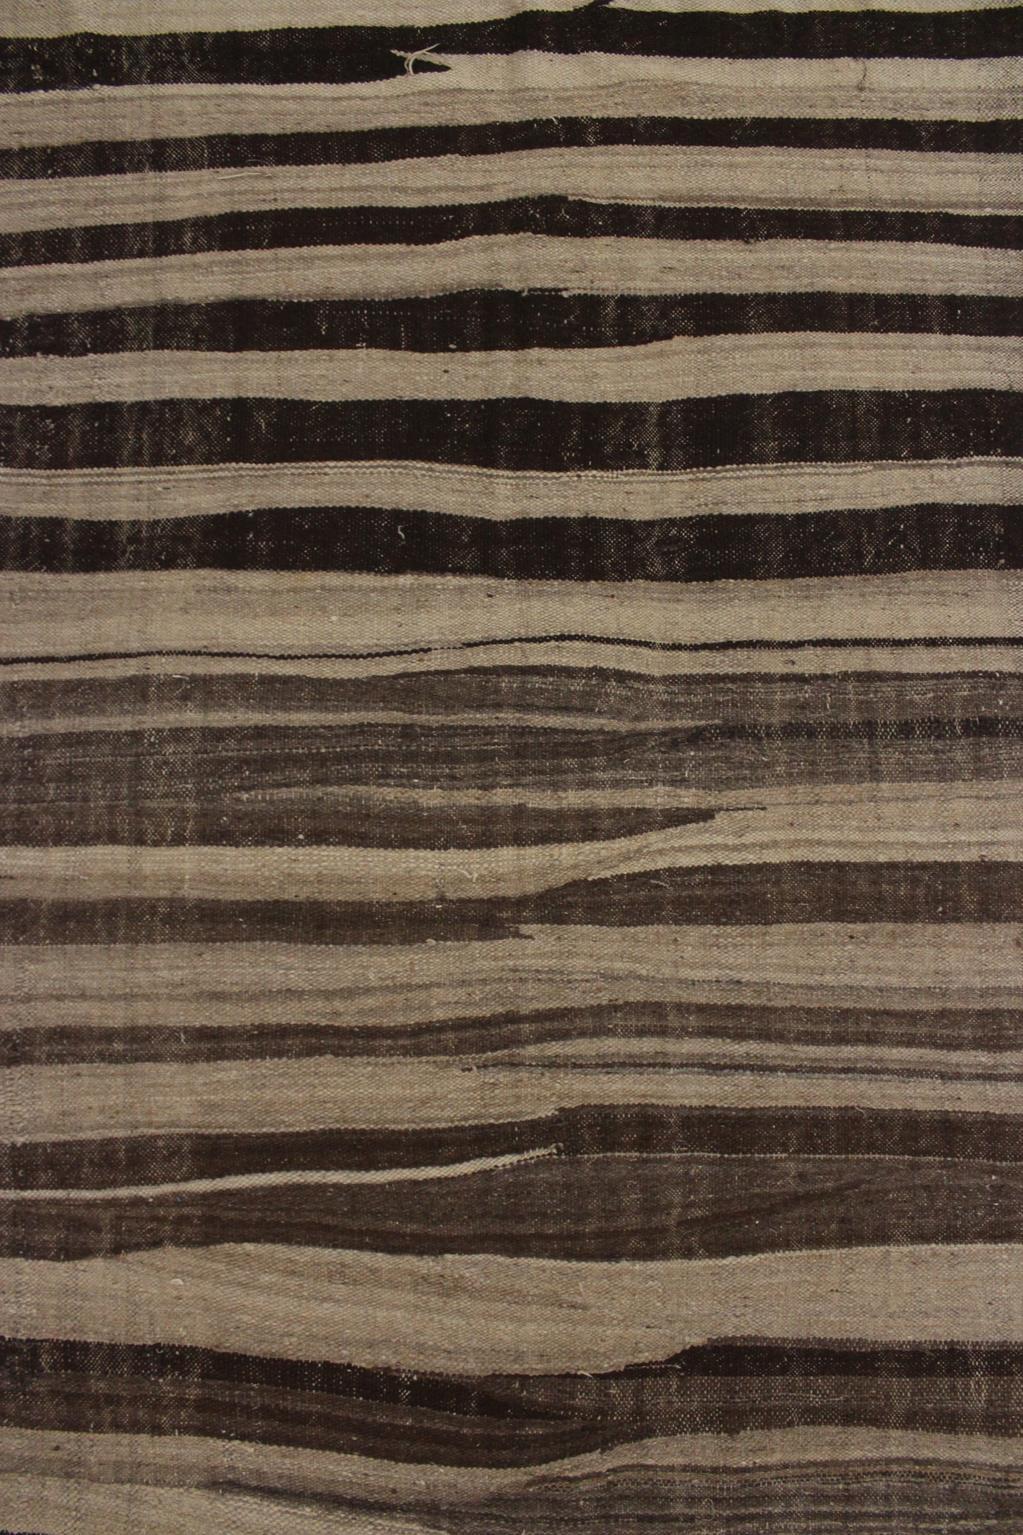 Vintage Moroccan Kilim rug - Stripes in beige+brown - 4.6x14.4feet / 142x440cm For Sale 1